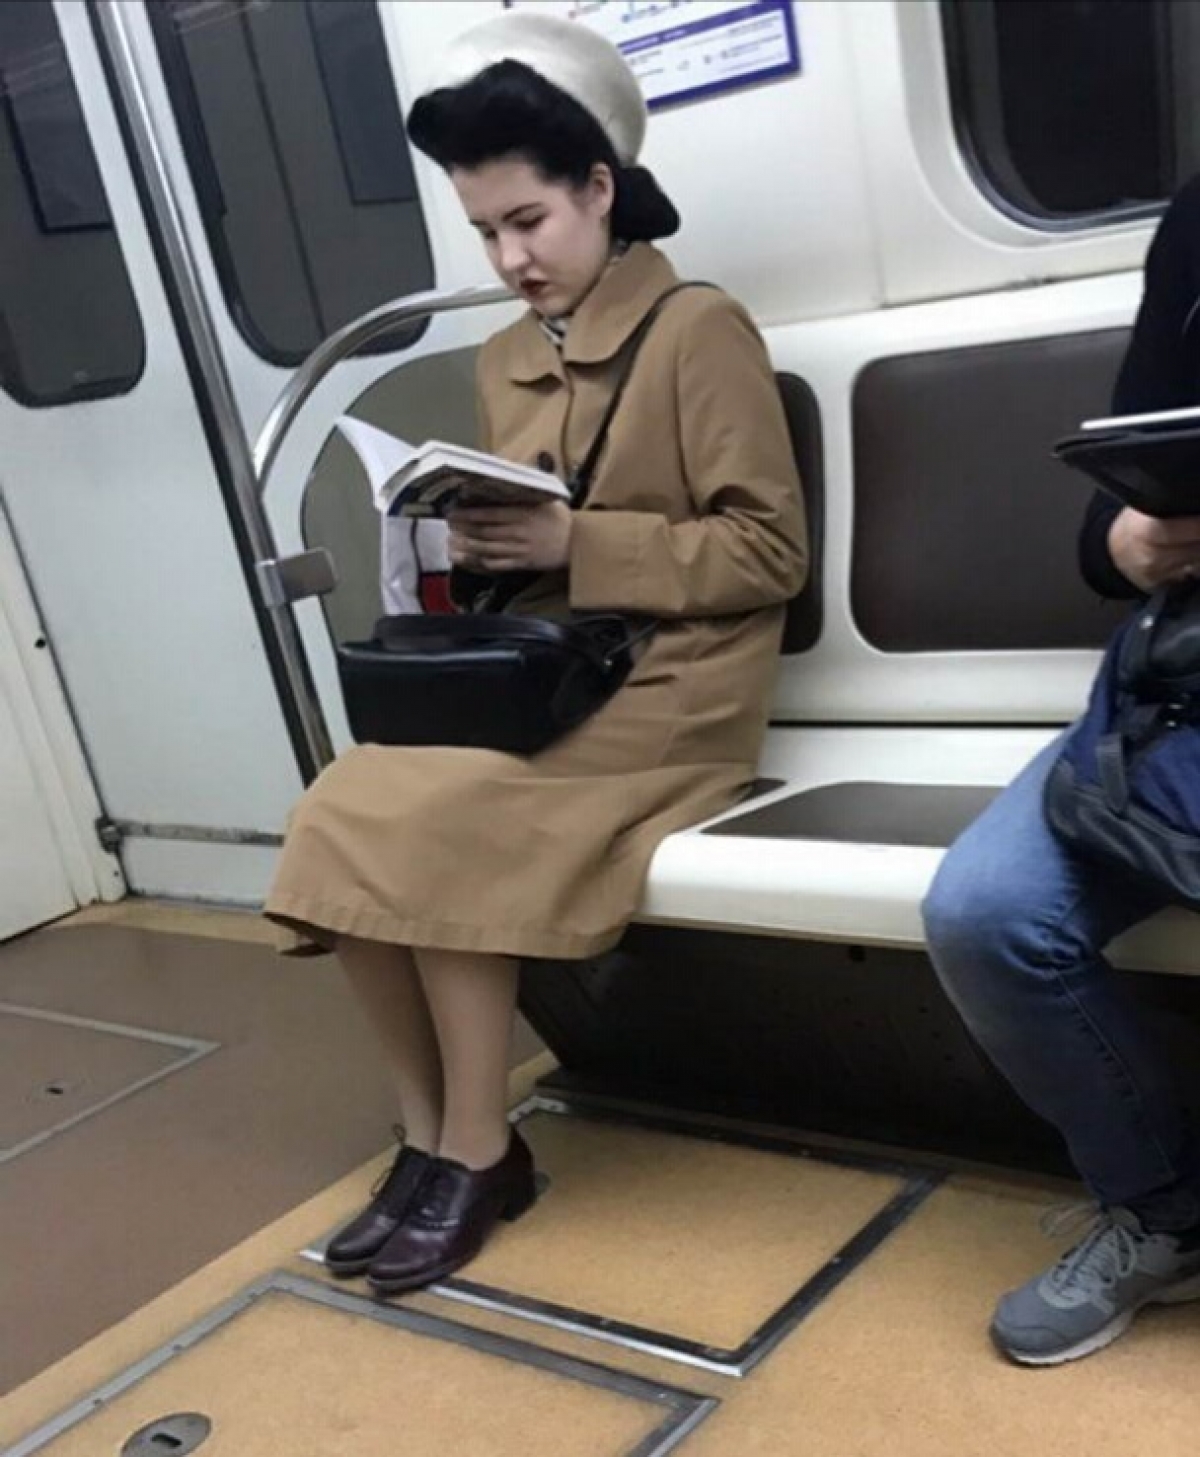 Чел в метро. Люди в метро. Обычные люди в метро. Сидит в метро. Пассажиры в метро сидят.